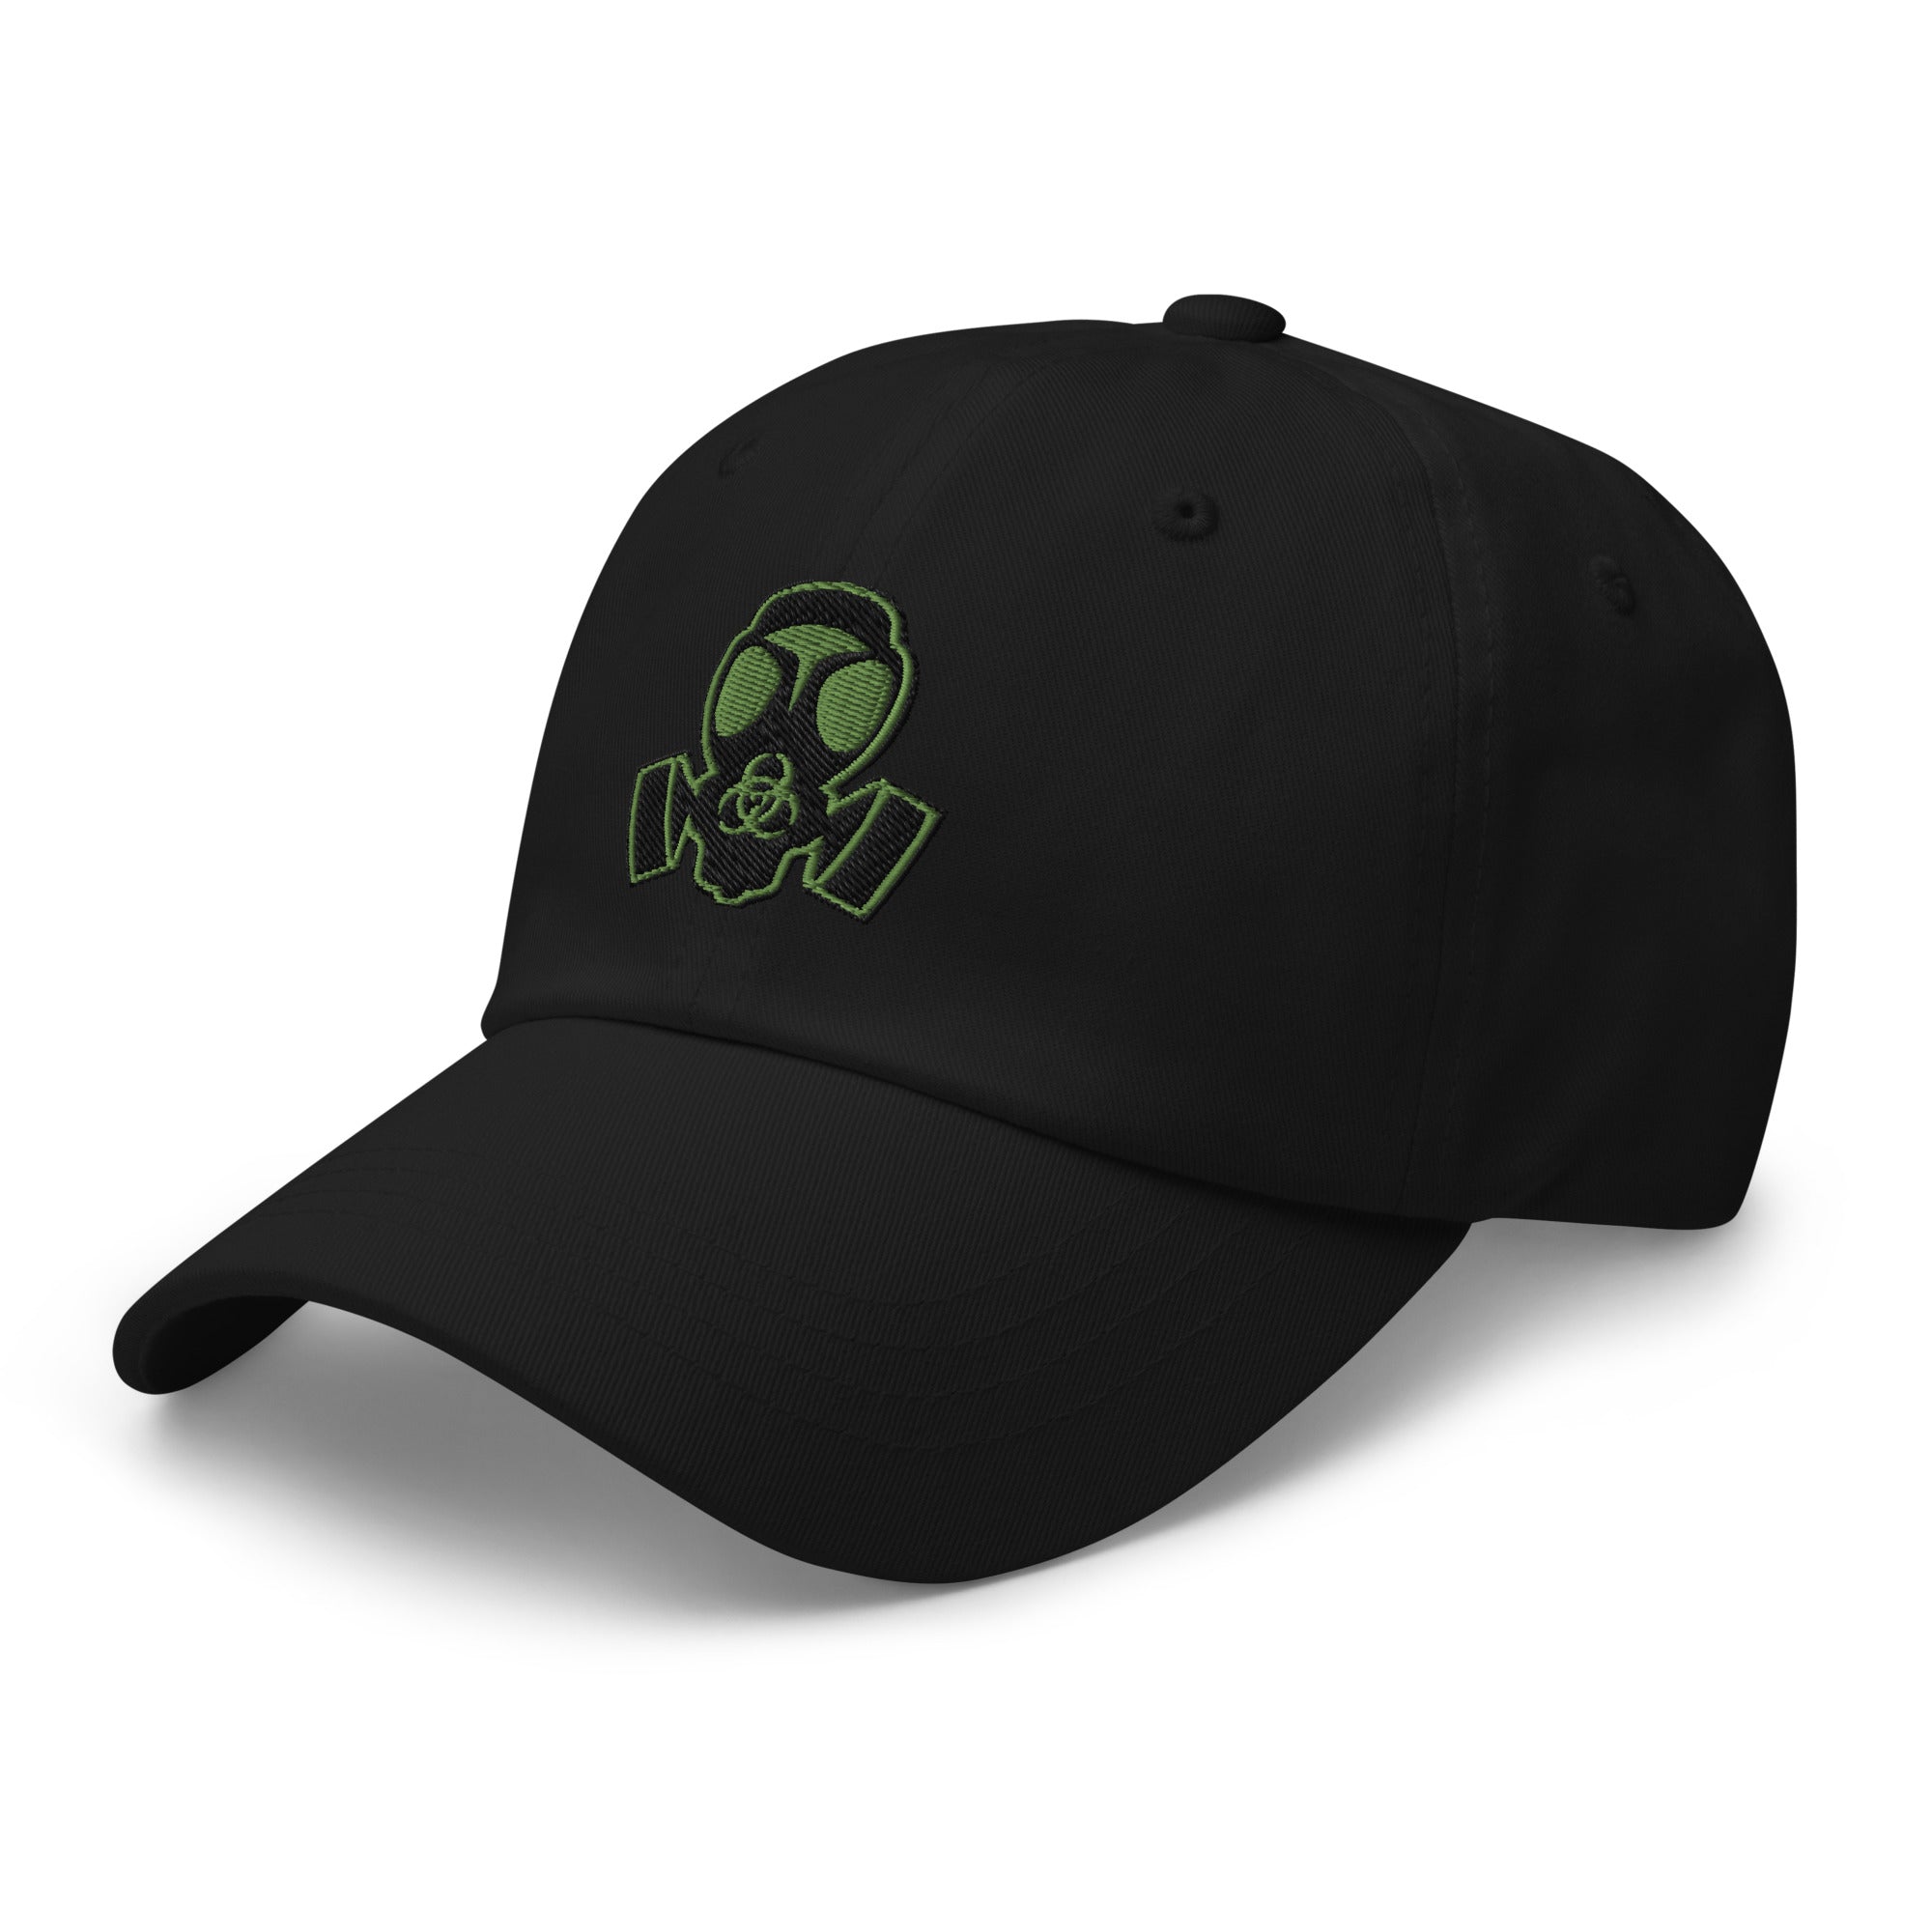 Bio Hazard Gas Mask Embroidered Baseball Cap Doomsday Prepper Green Thread Dad hat - Edge of Life Designs